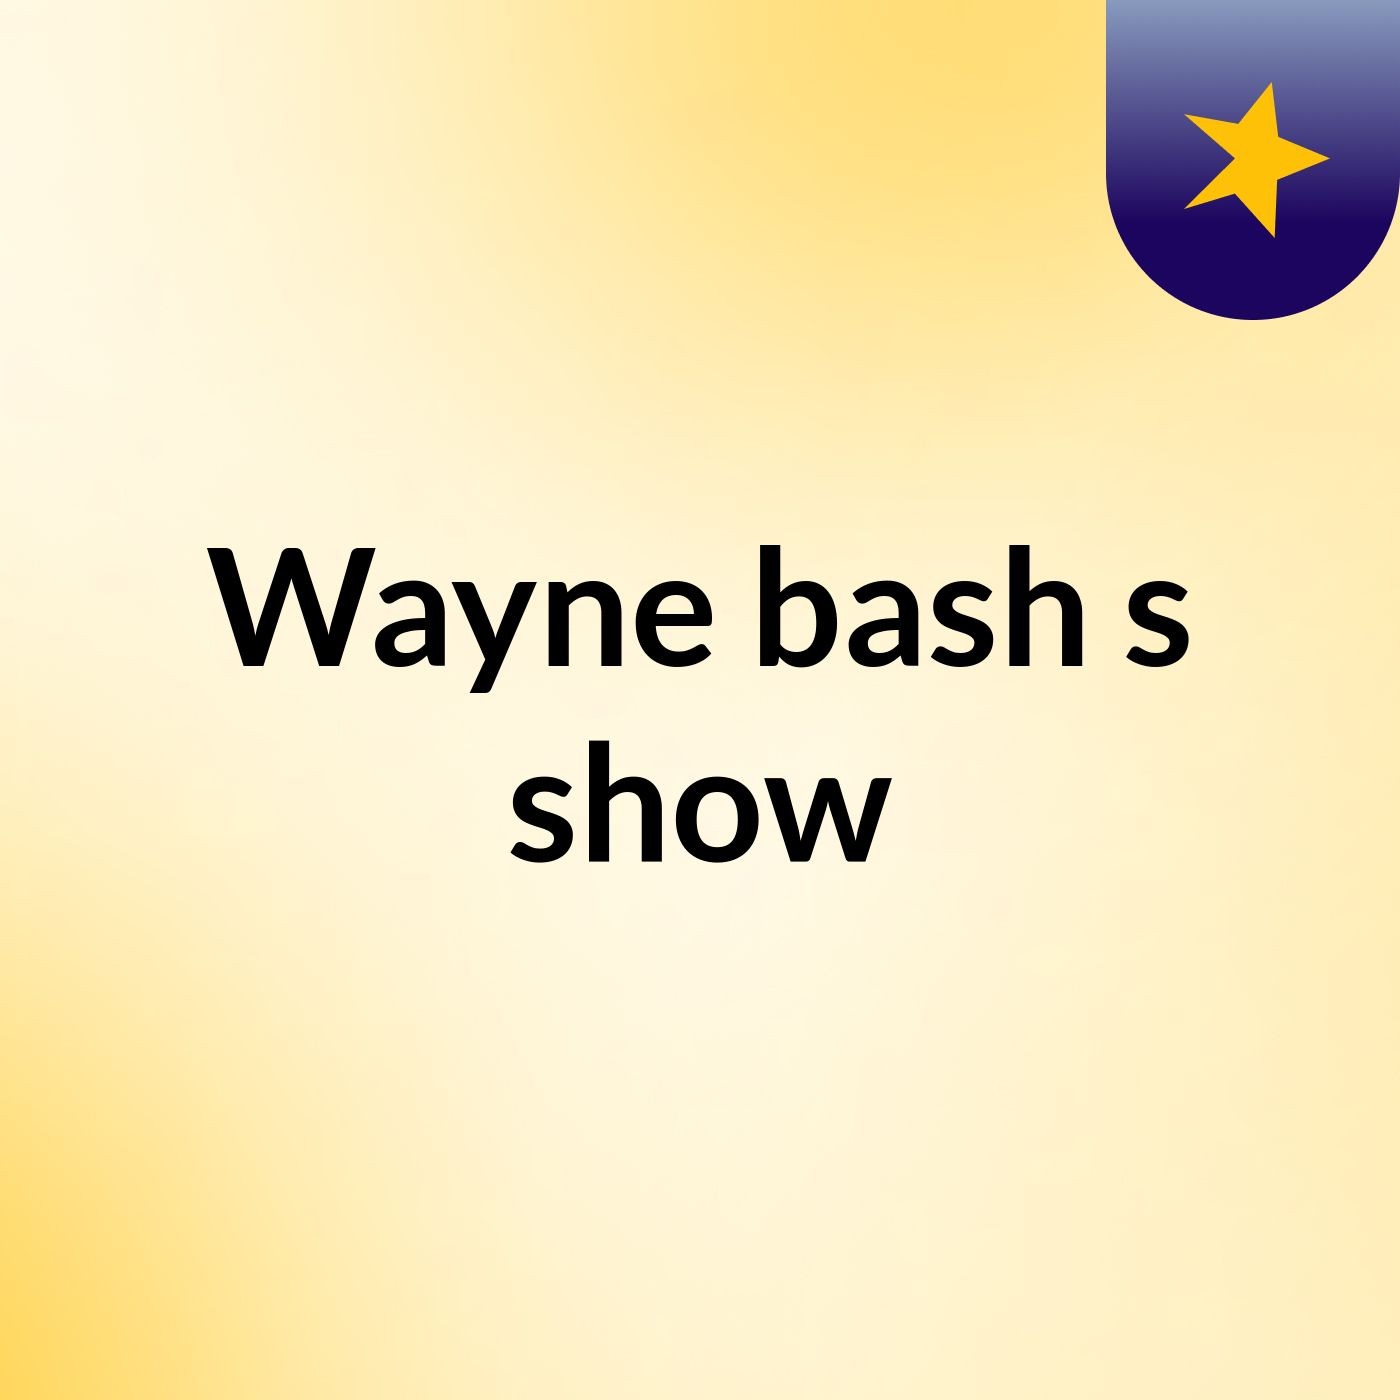 Wayne bash's show